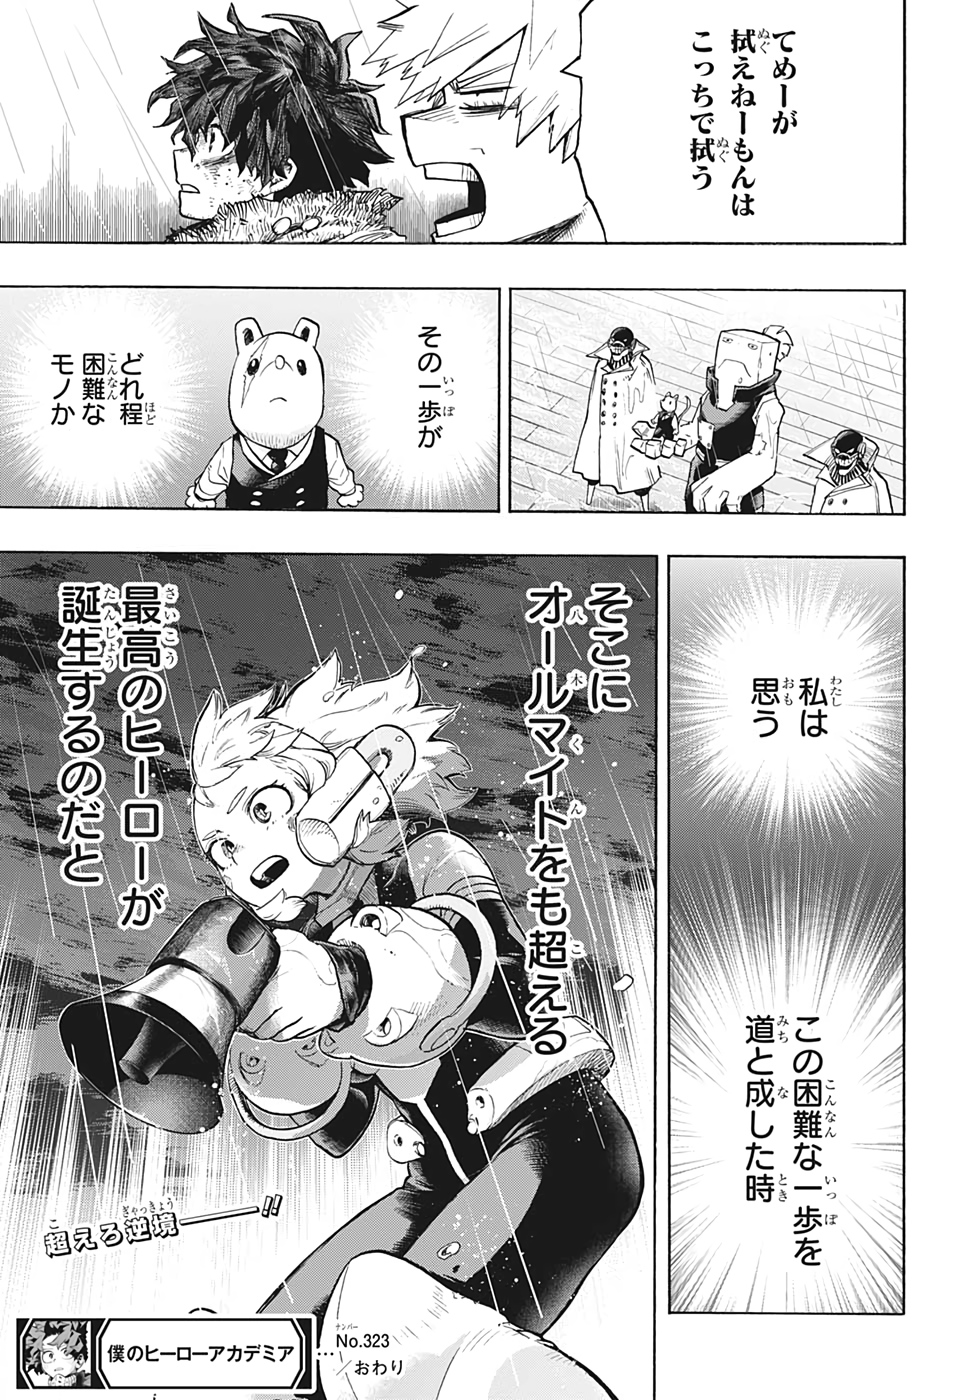 Boku no Hero Academia - Chapter 323 - Page 17